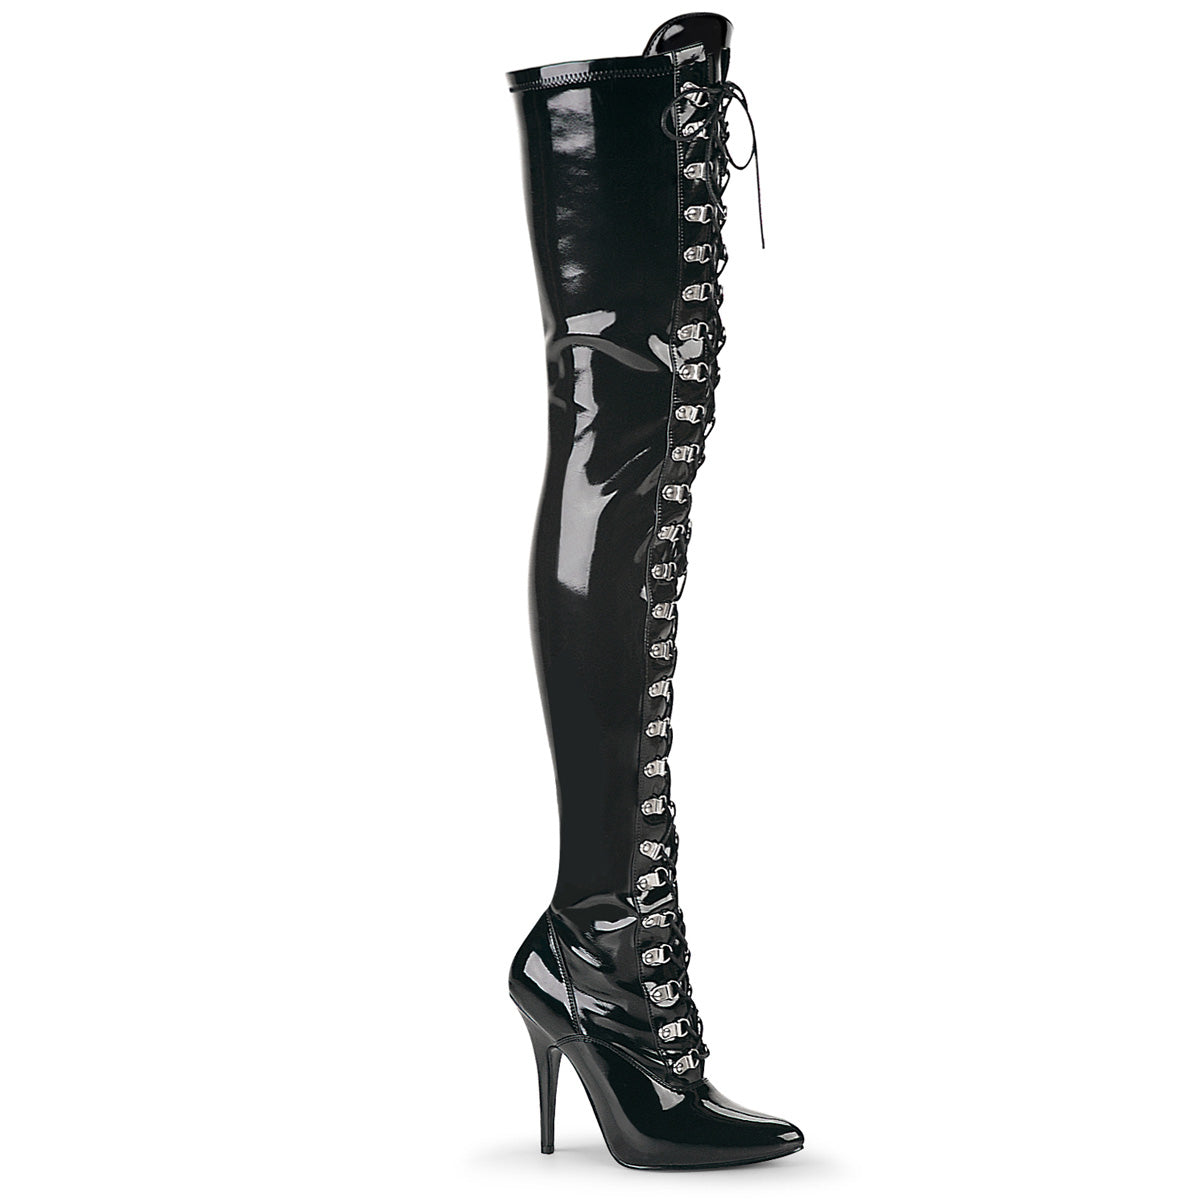 SEDUCE-3024 Thigh Boots 5"Heel Black Patent Fetish Footwear